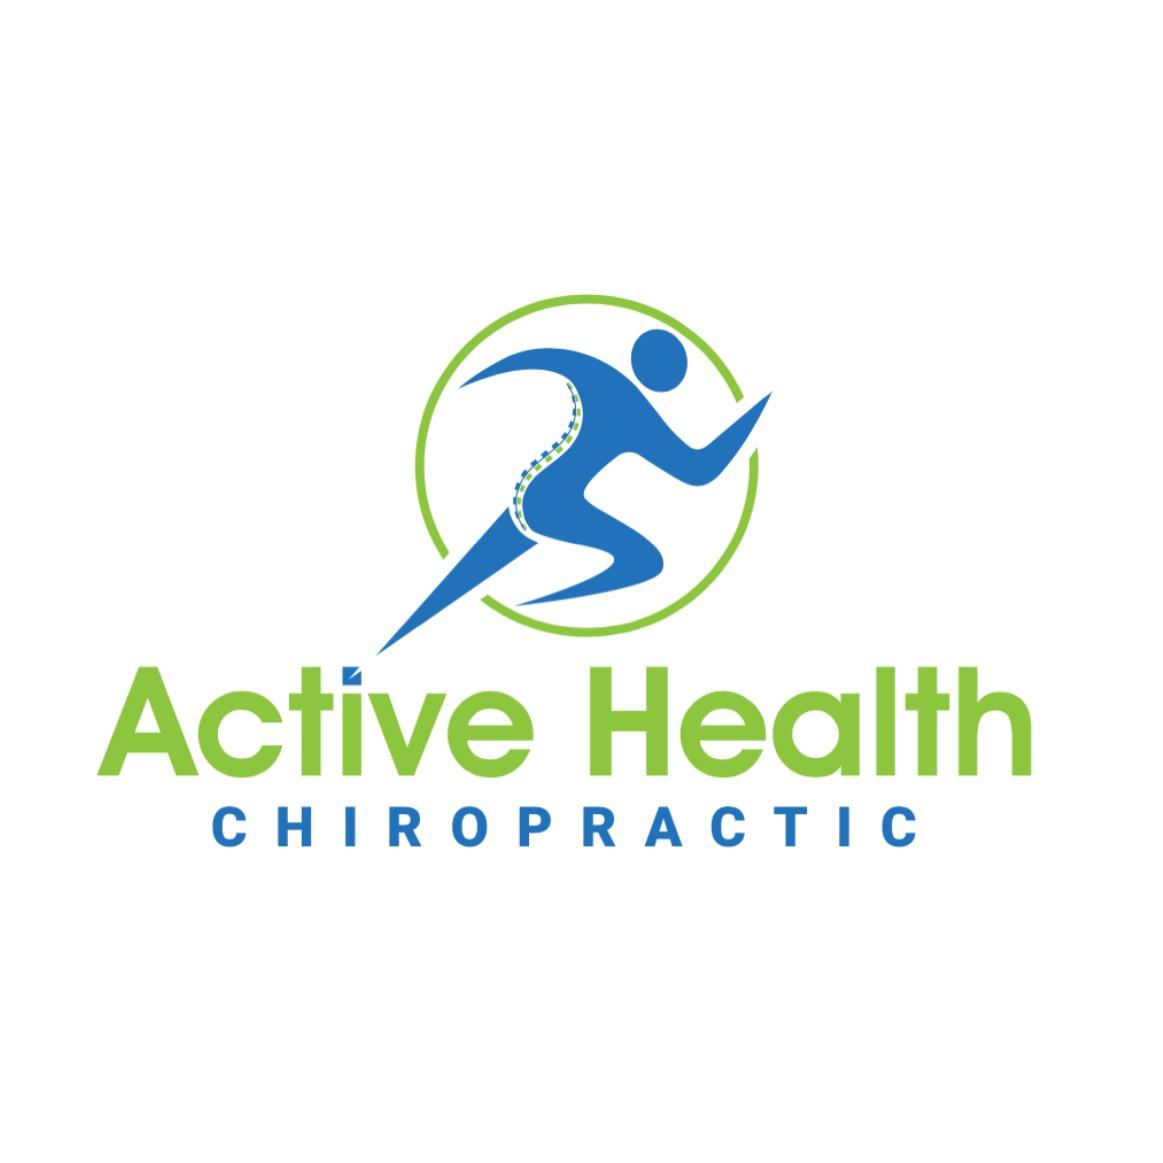 Active Health Chiropractic - Joplin, MO 64801 - (417)781-9300 | ShowMeLocal.com